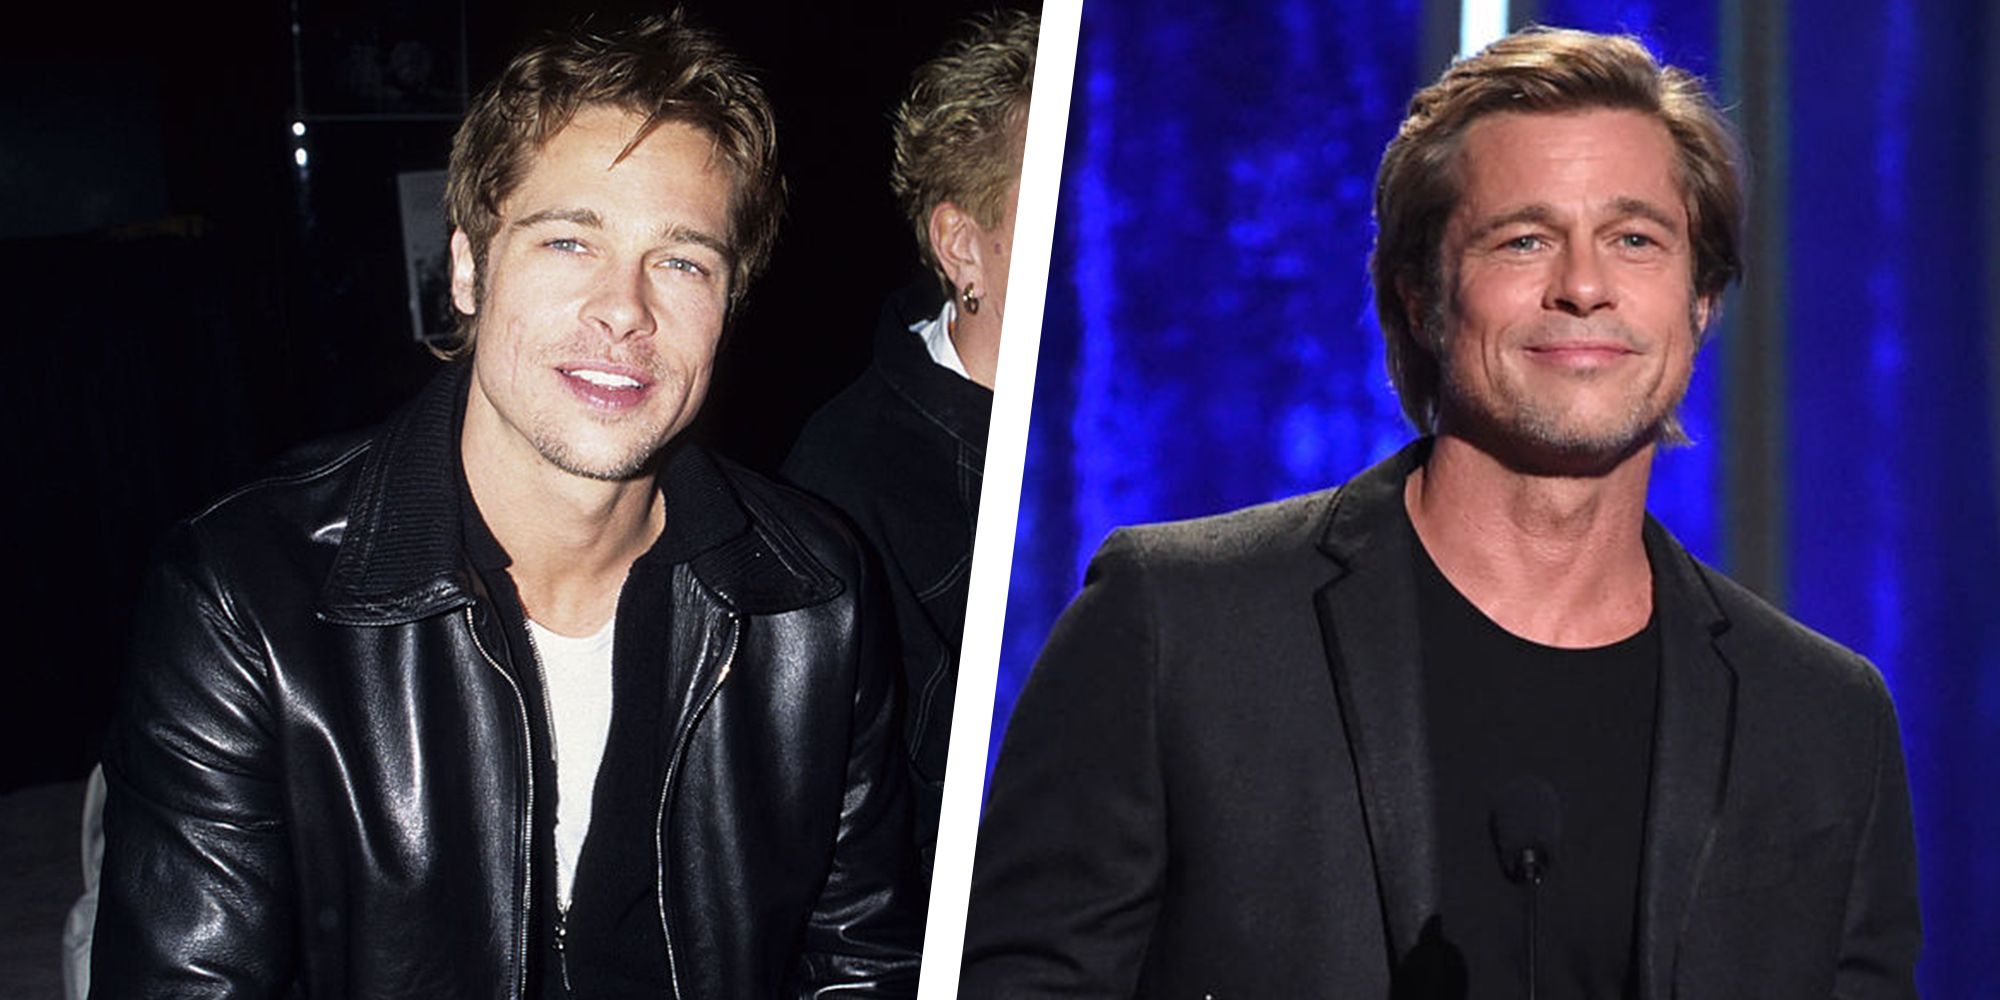 50 Photos Of Brad Pitt That Prove He Hasn'T Aged